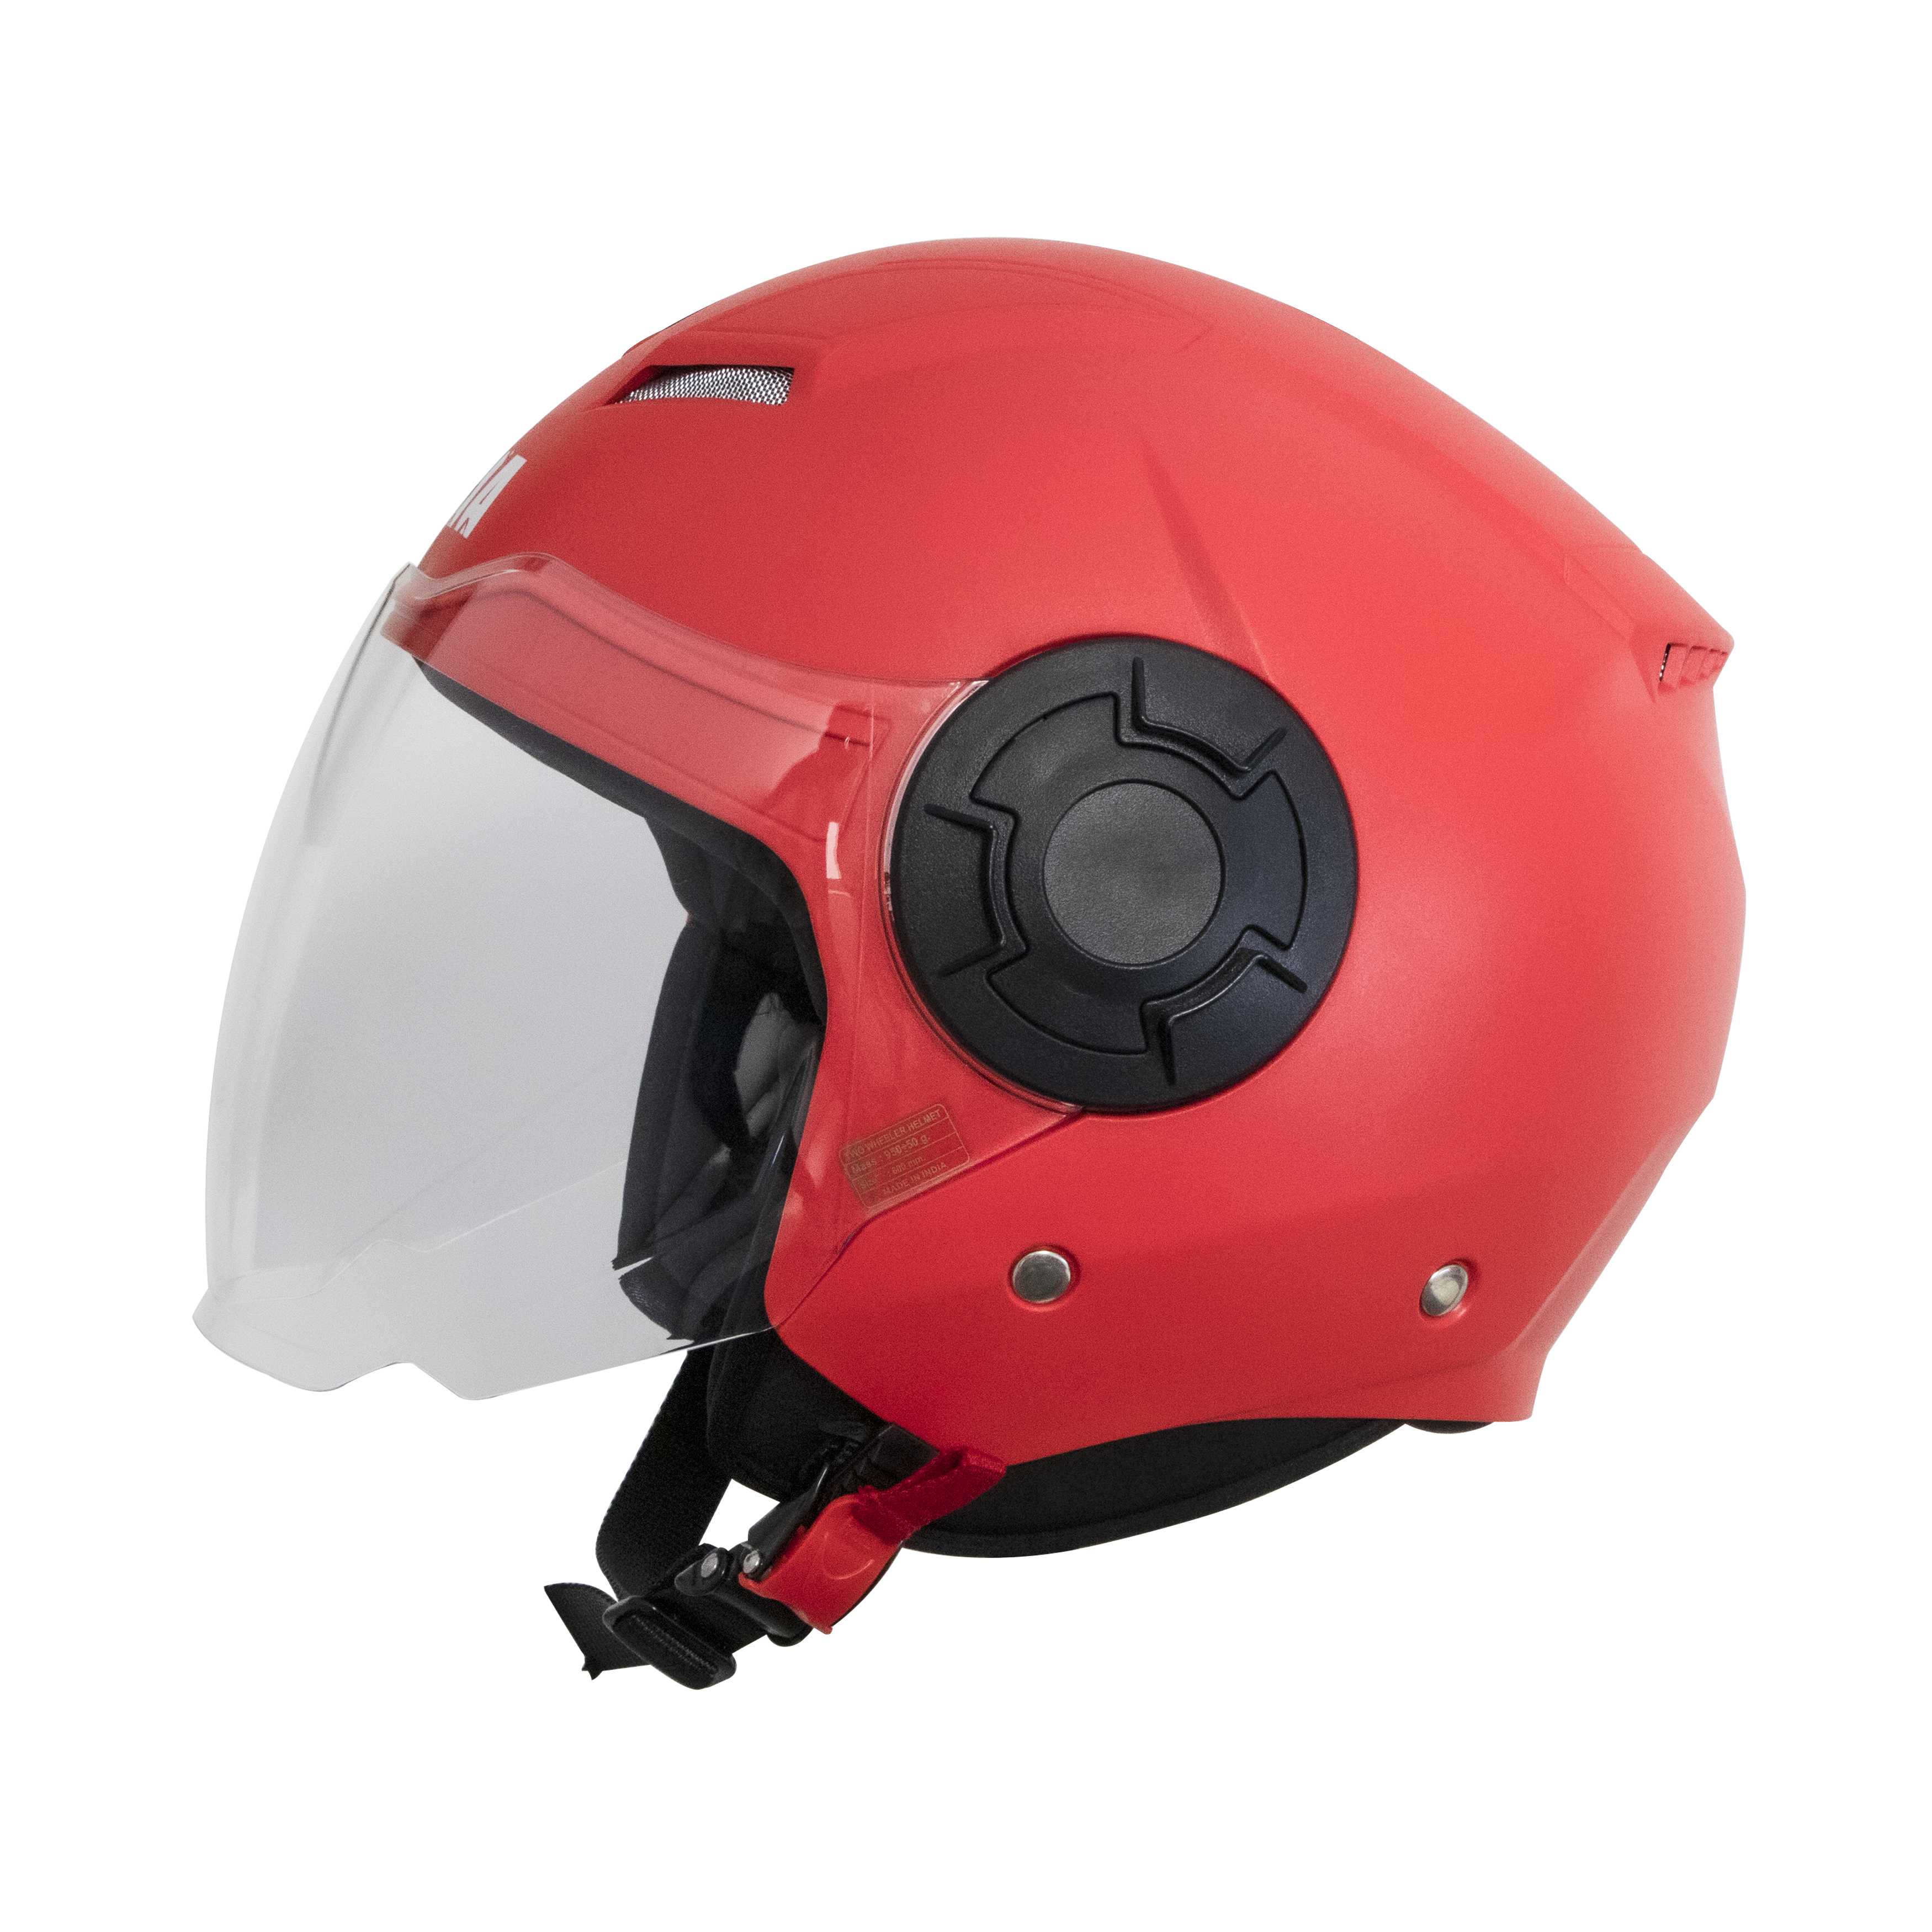 Steelbird Baron Open Face Helmet , ISI Certified Helmet (Dashing Red With Clear Visor)